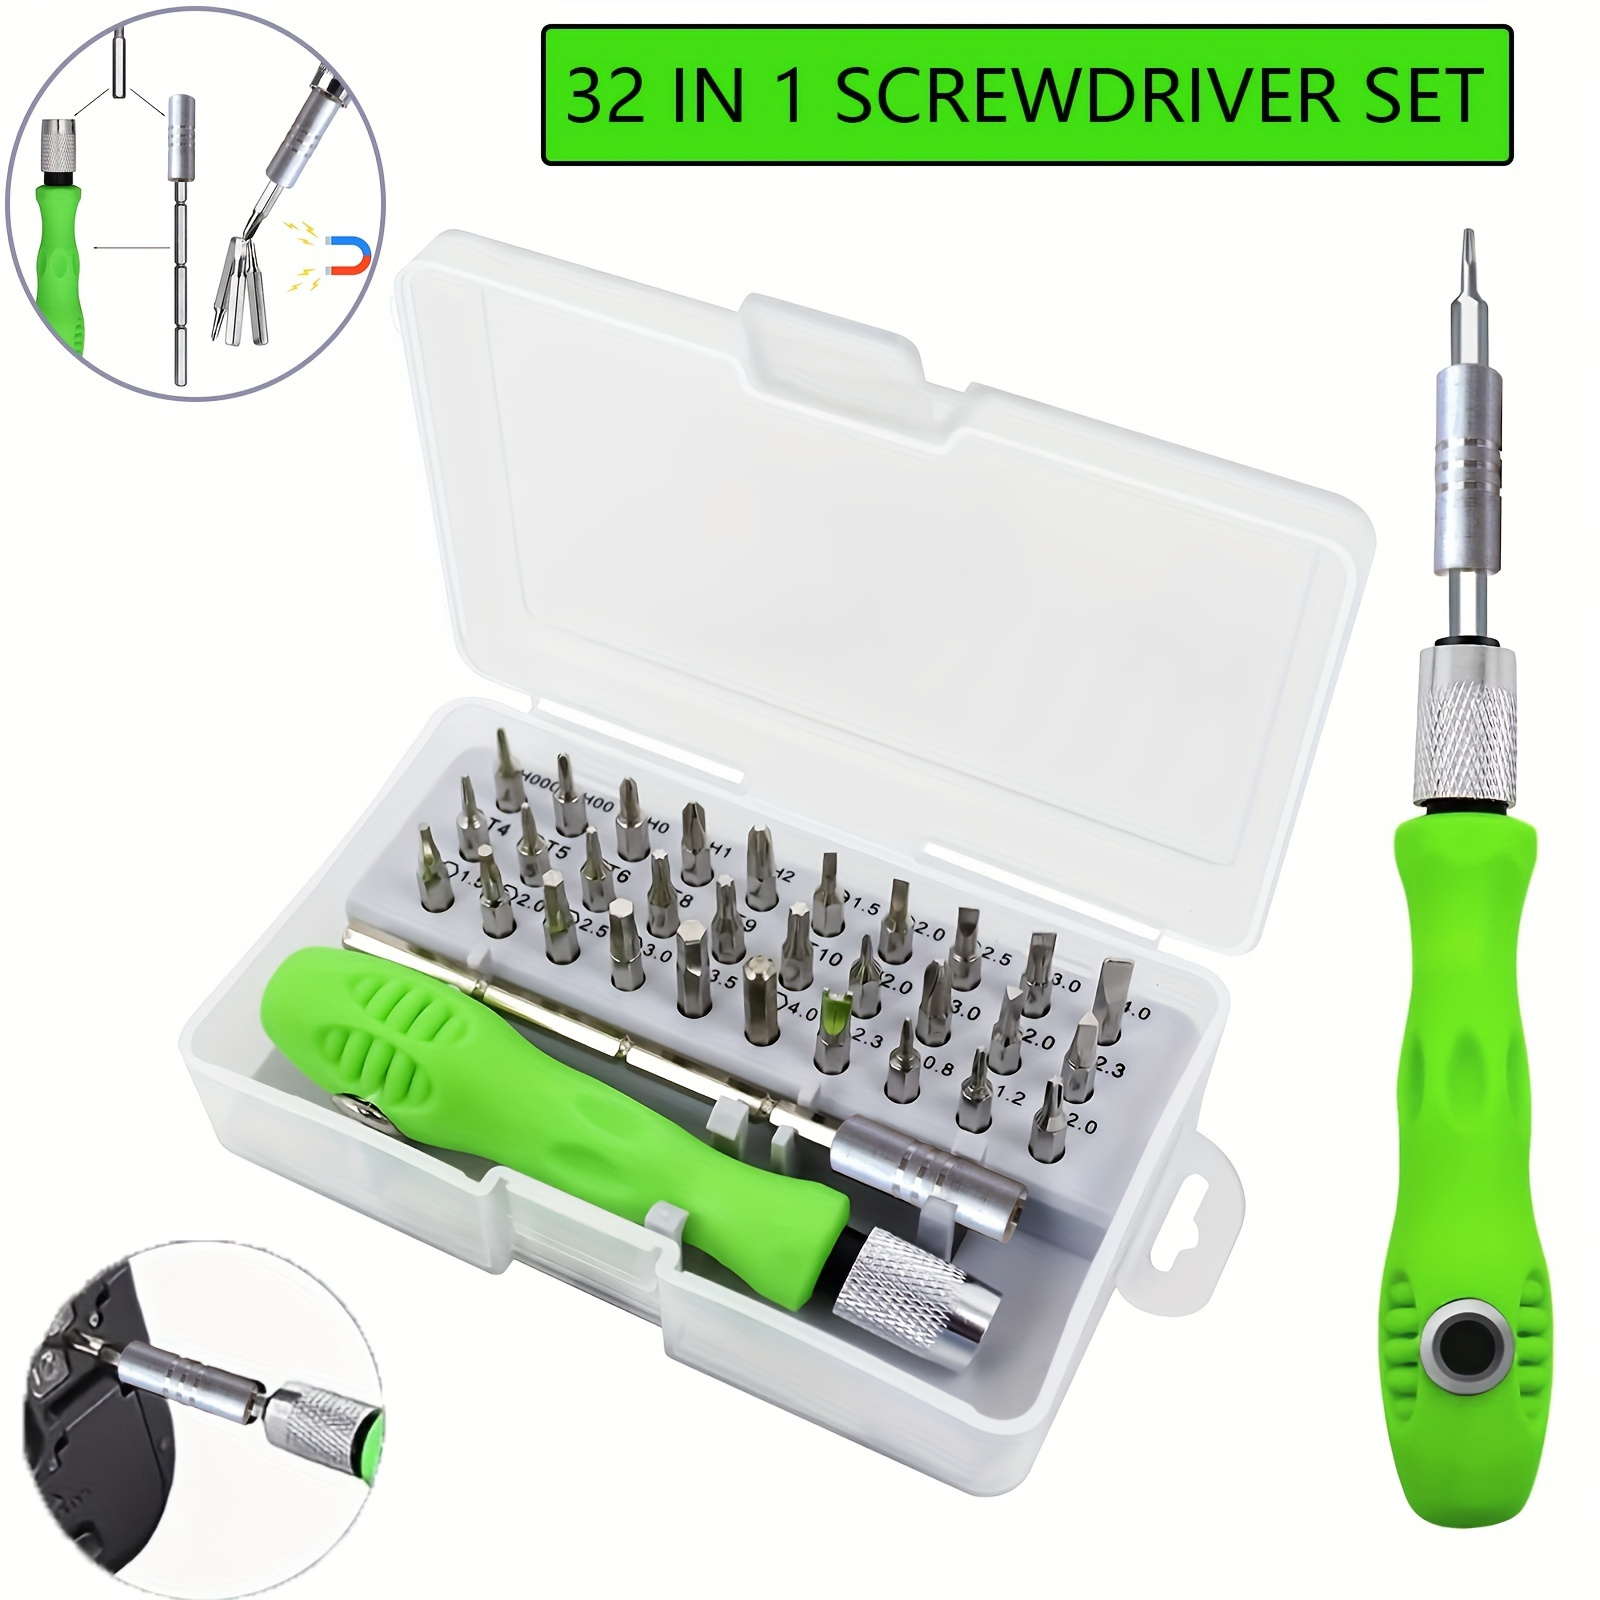 Tkiszyzr 32 in 1 Small Screwdriver Set, Mini Magnetic Screwdriver Set – Contains 30 Bits Precision Repair Tool Kit, Torx Screwdriver Tool Sets for